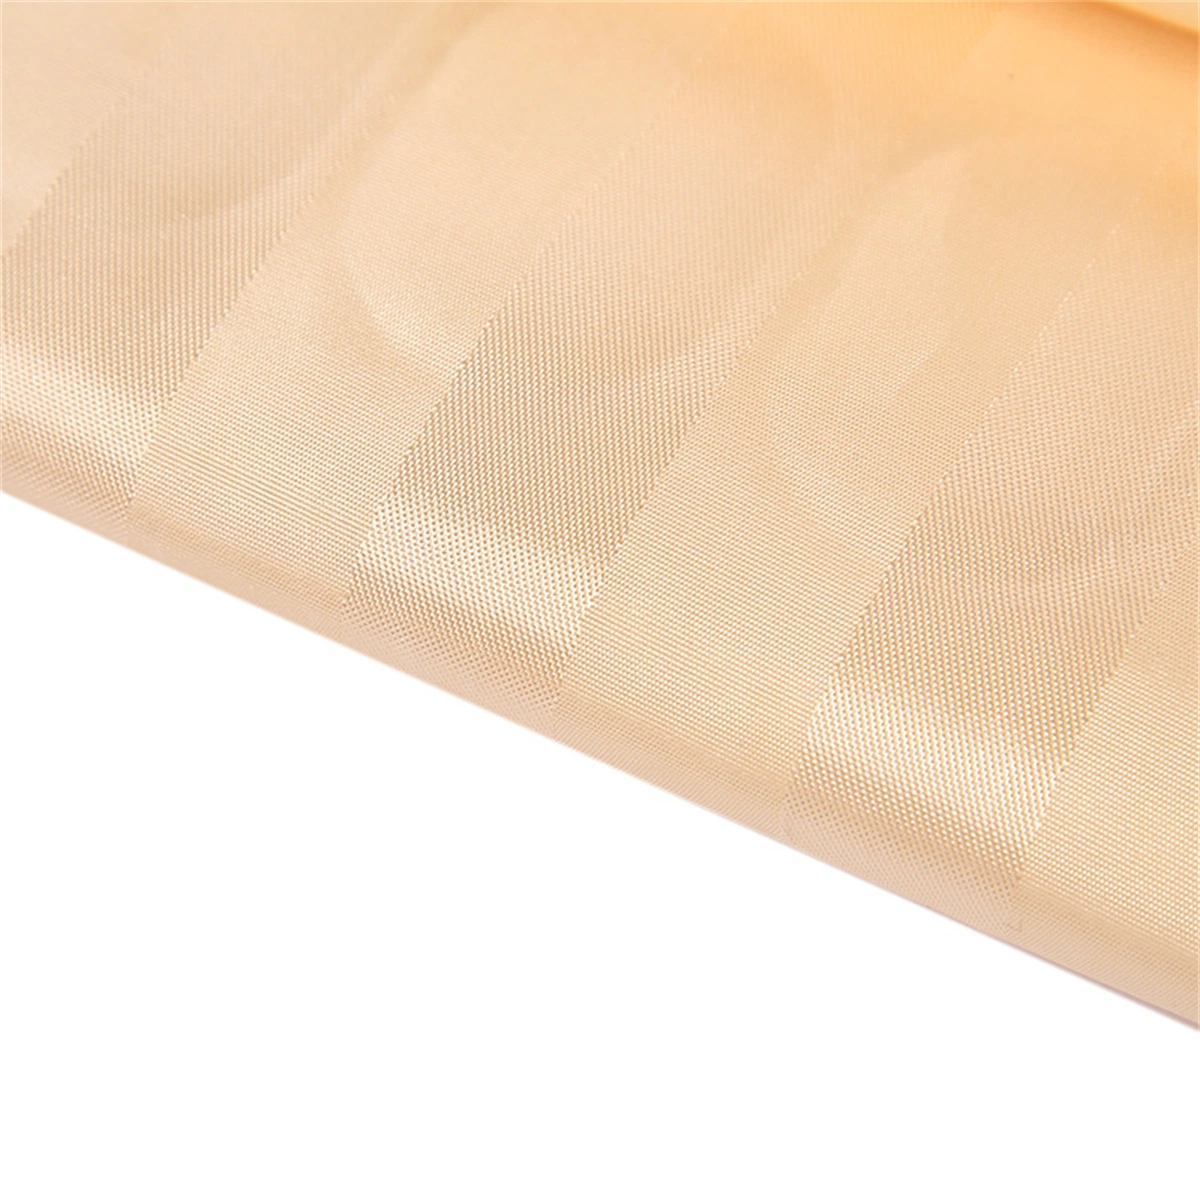 Sensación de seda poliéster impermeable resistente al moho cortina de baño con ducha